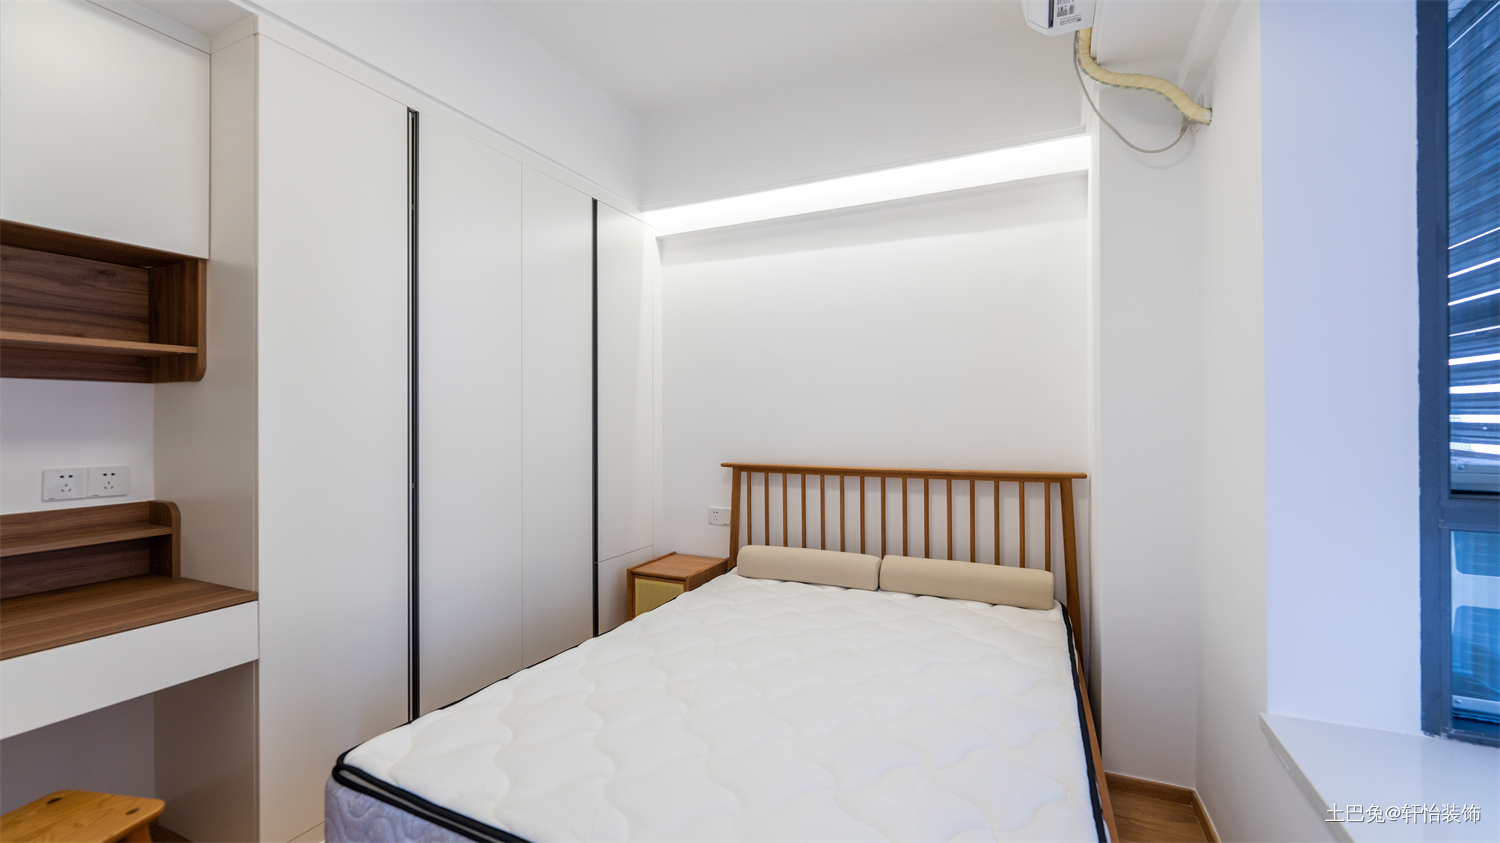 12w改造68㎡原木风儿童房扩容3㎡日式卧室设计图片赏析